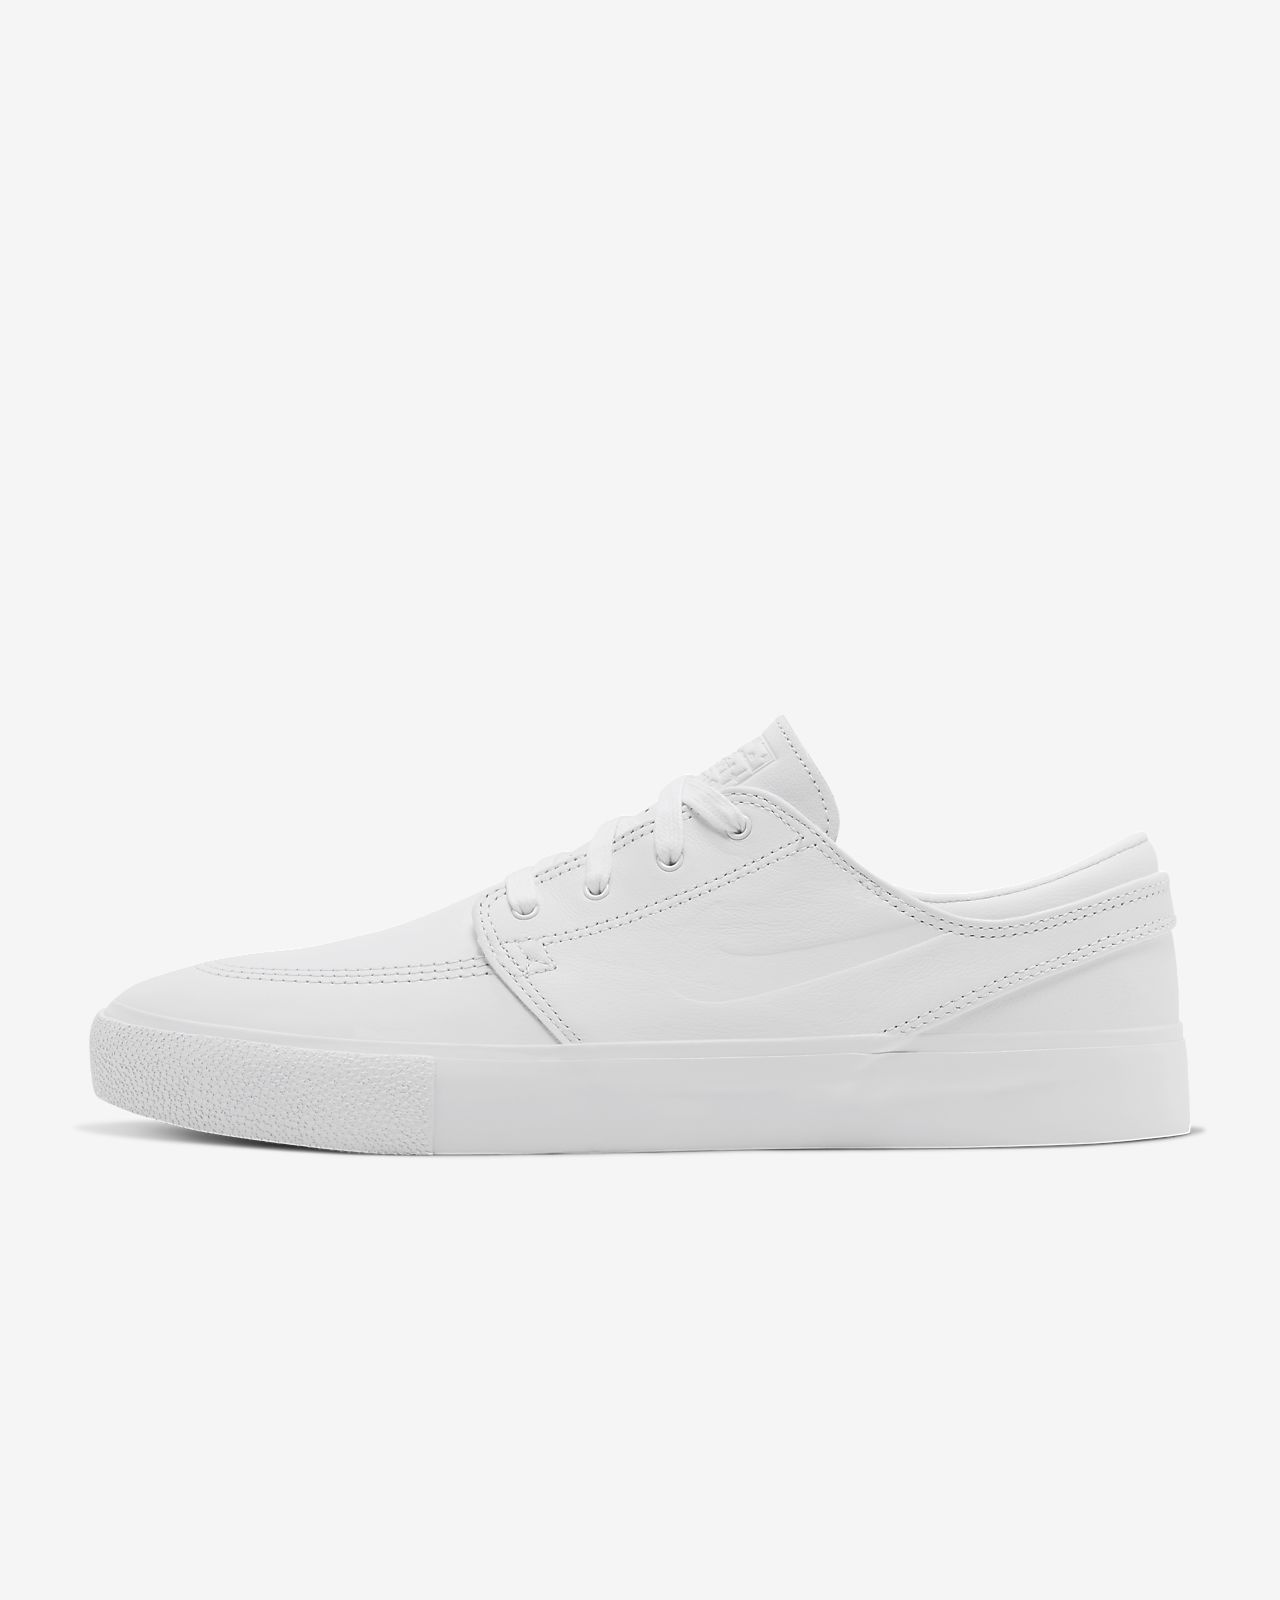 nike sb shoes white leather